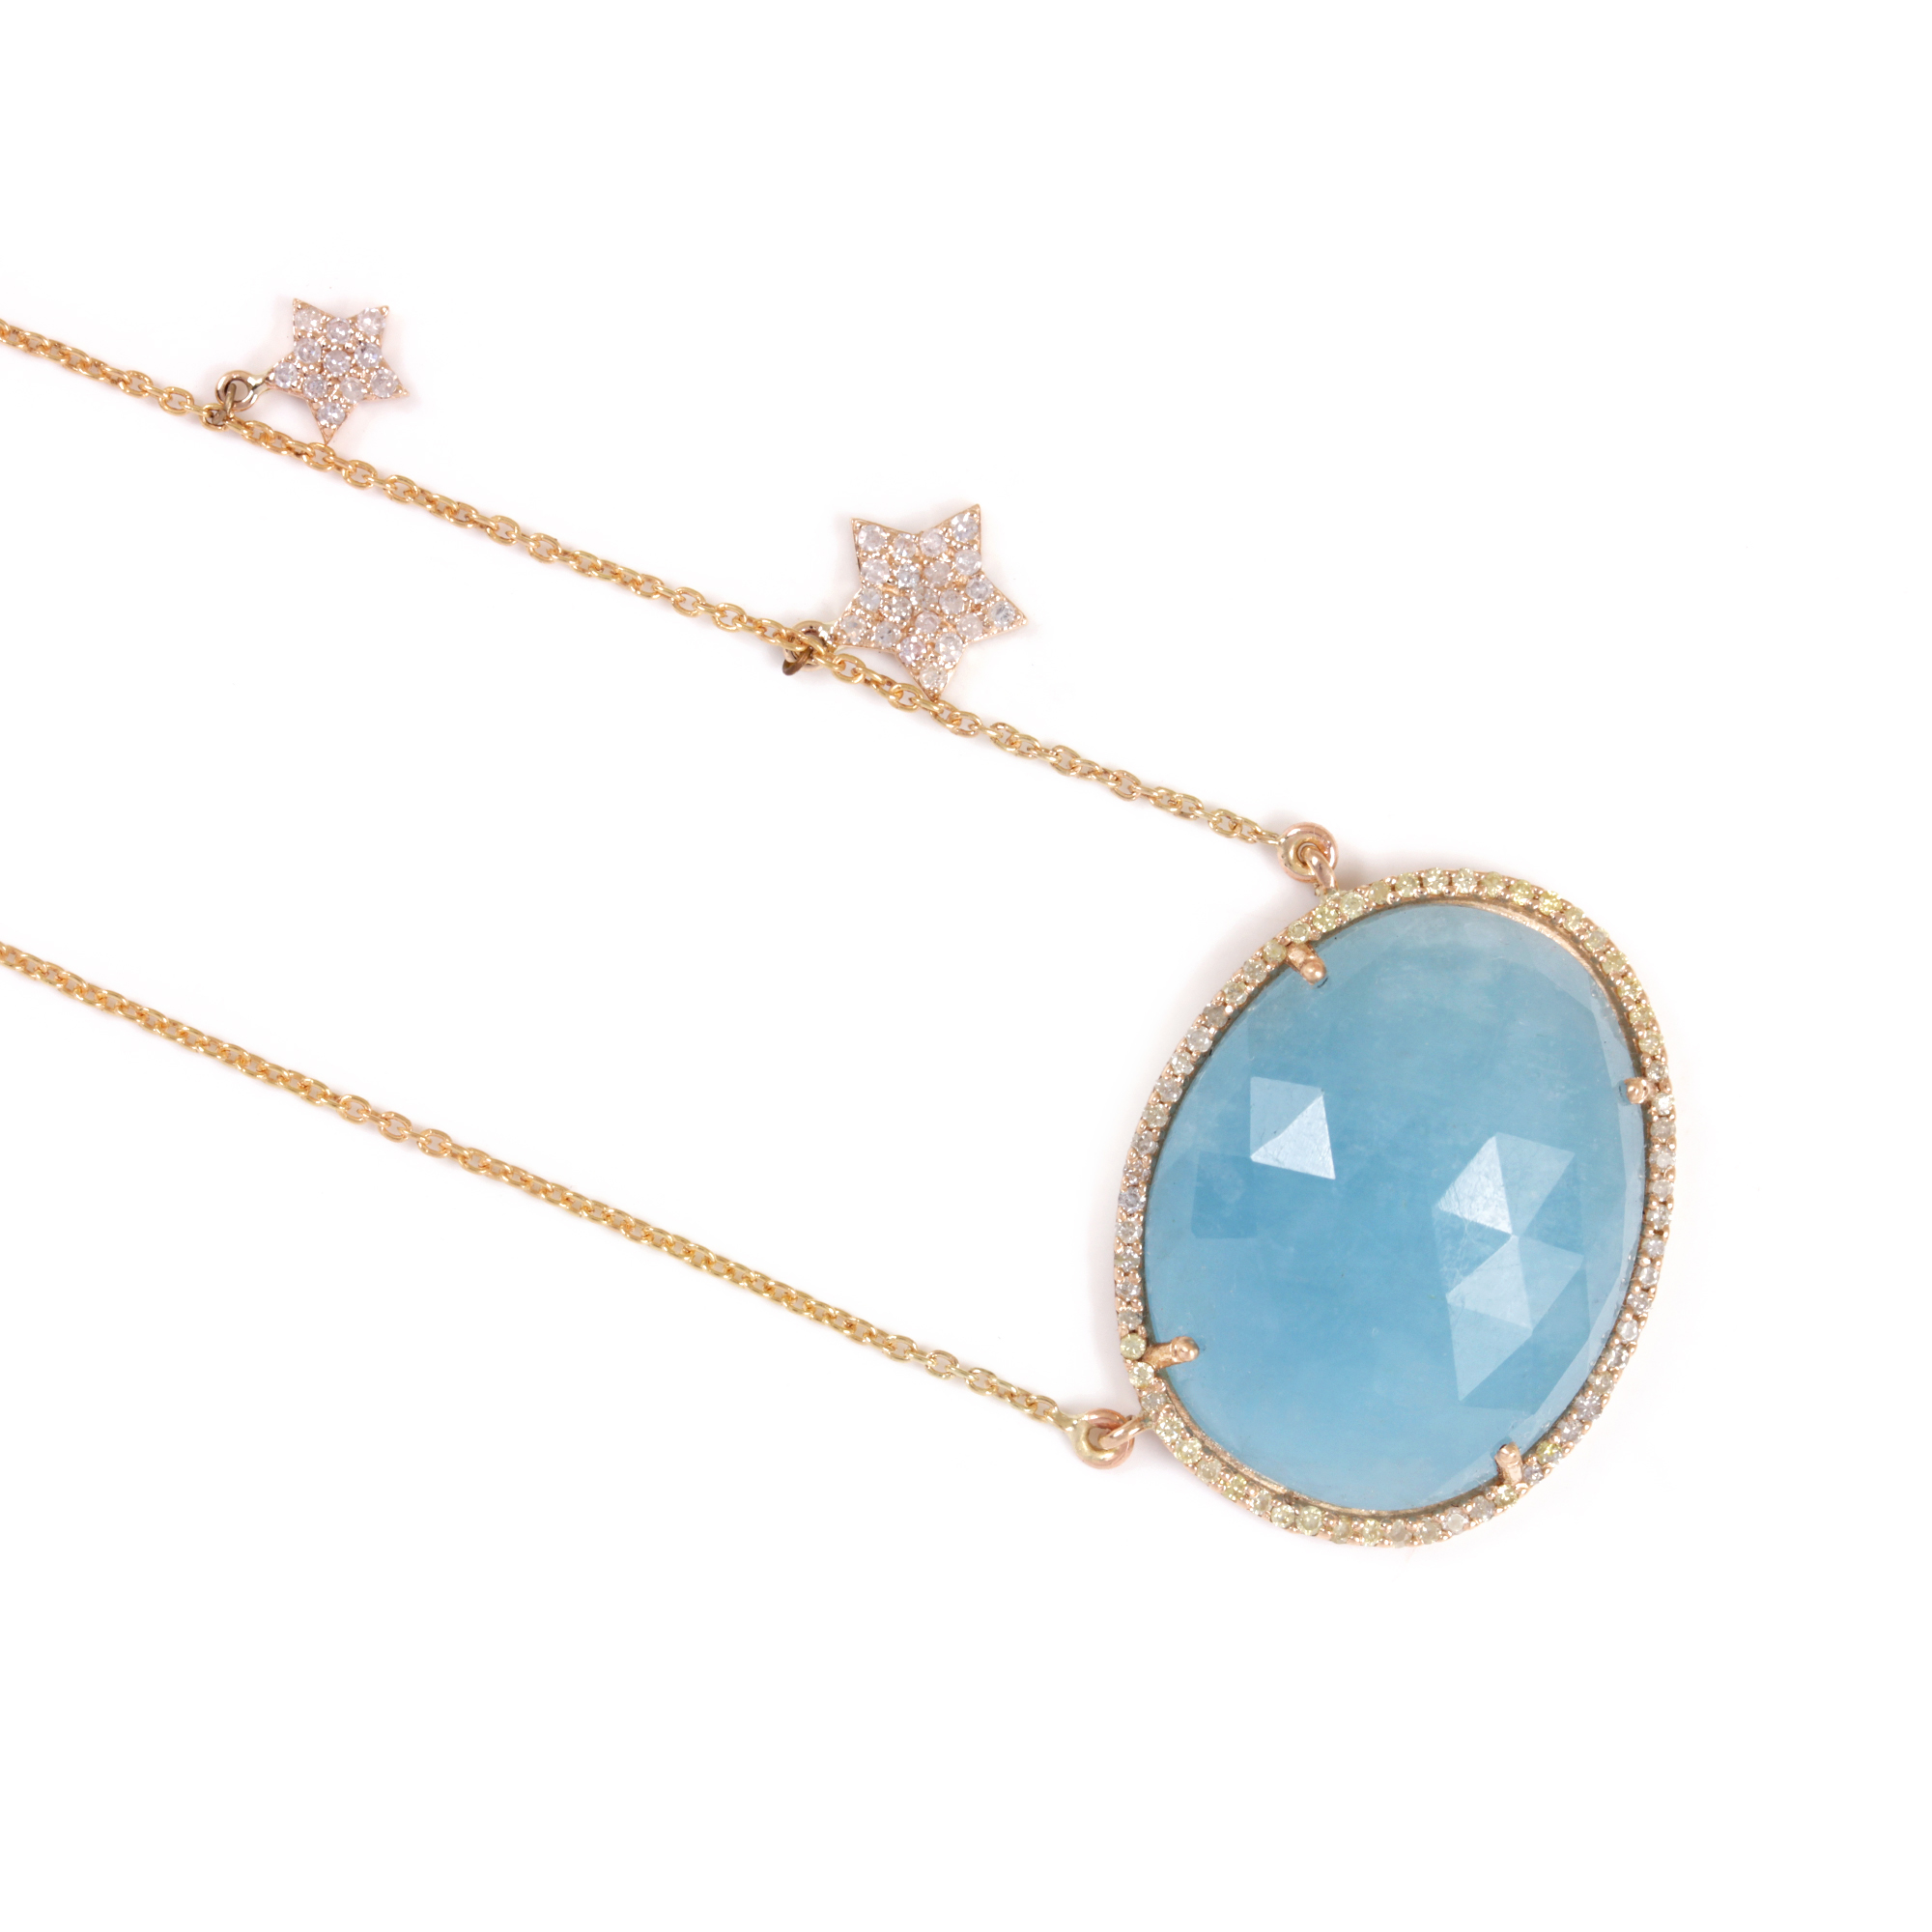 Pave Diamond Aquamarine Pendant Necklace 14K Solid Gold Chain Jewelry